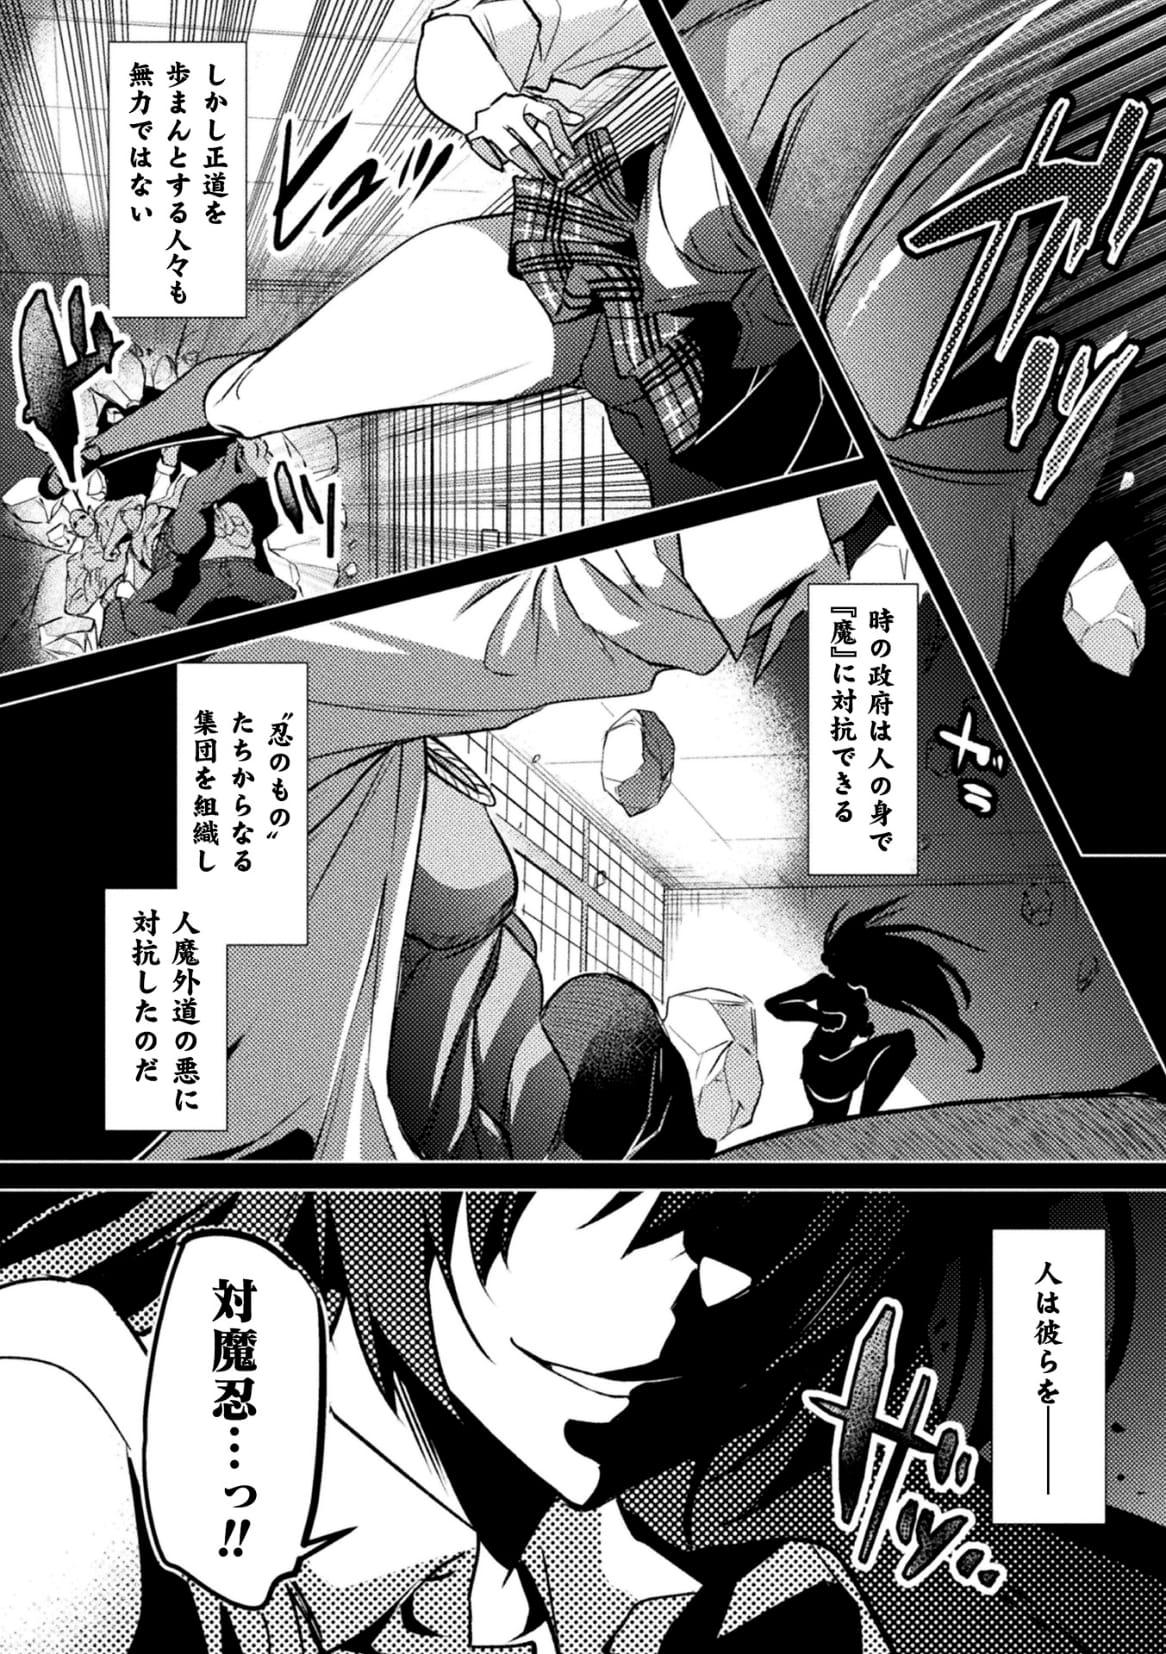 Taimanin Asagi ZERO THE COMIC vol 1 3